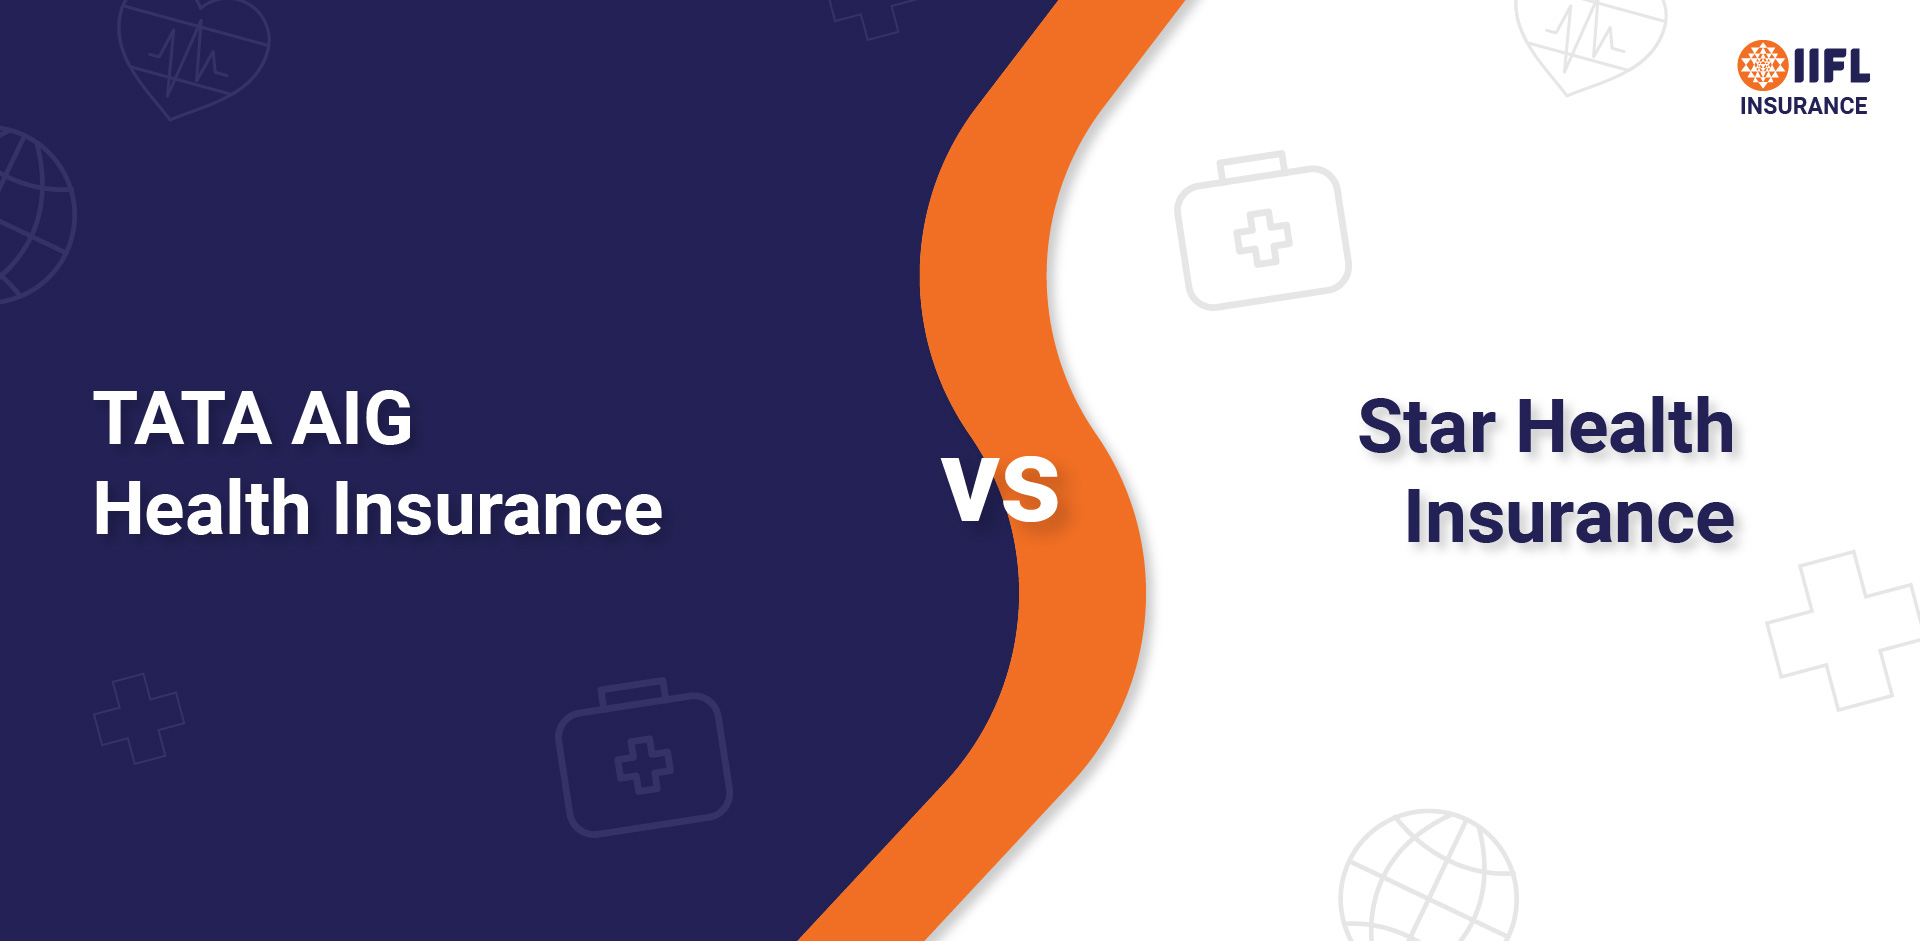 Tata AIG Health Insurance vs Star Health Insurance